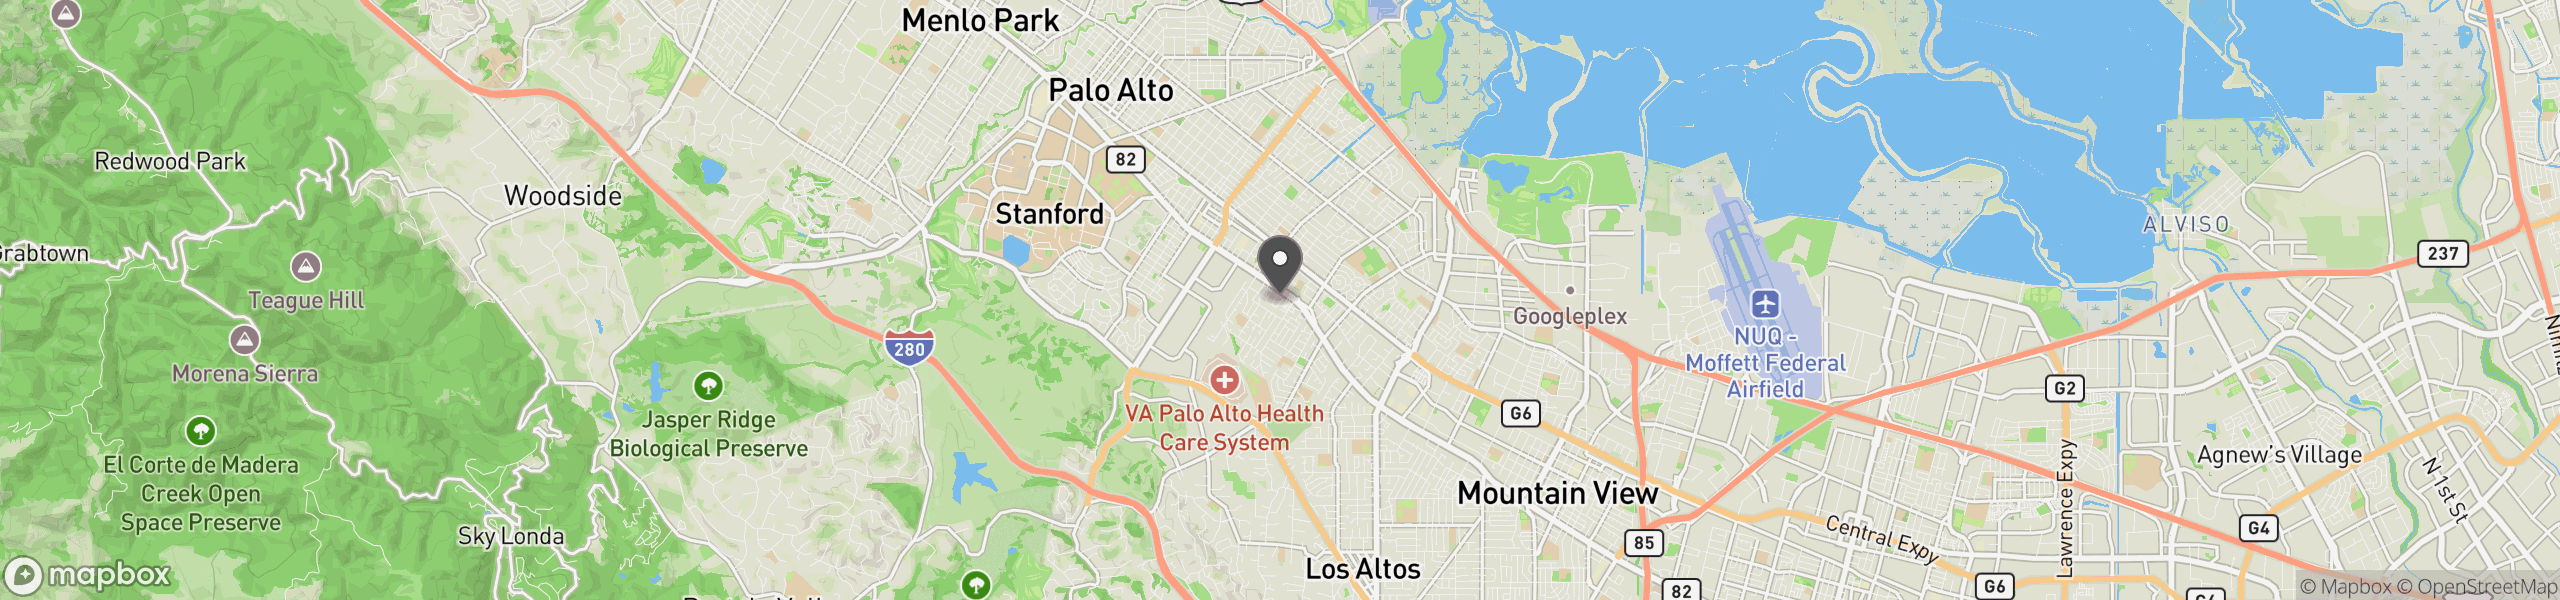 Palo Alto, CA 94306